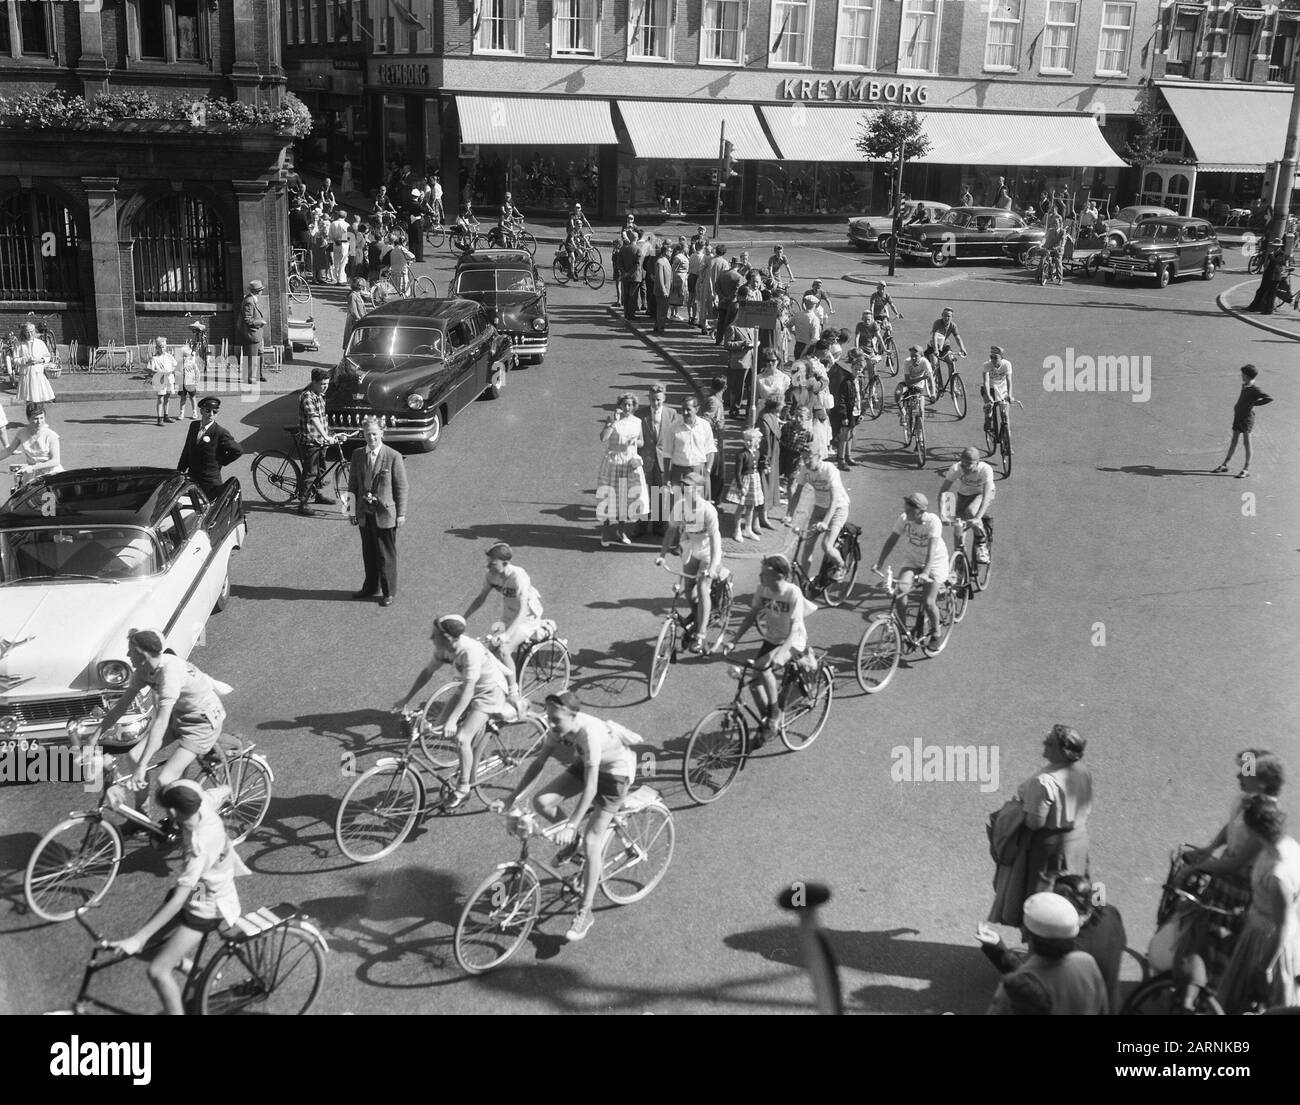 Start mosquito round in Haarlem (City Hall Grote Markt)/Affected Date: 5 August 1957 Location: Haarlem Keywords: START, Stadhuizen Stock Photo